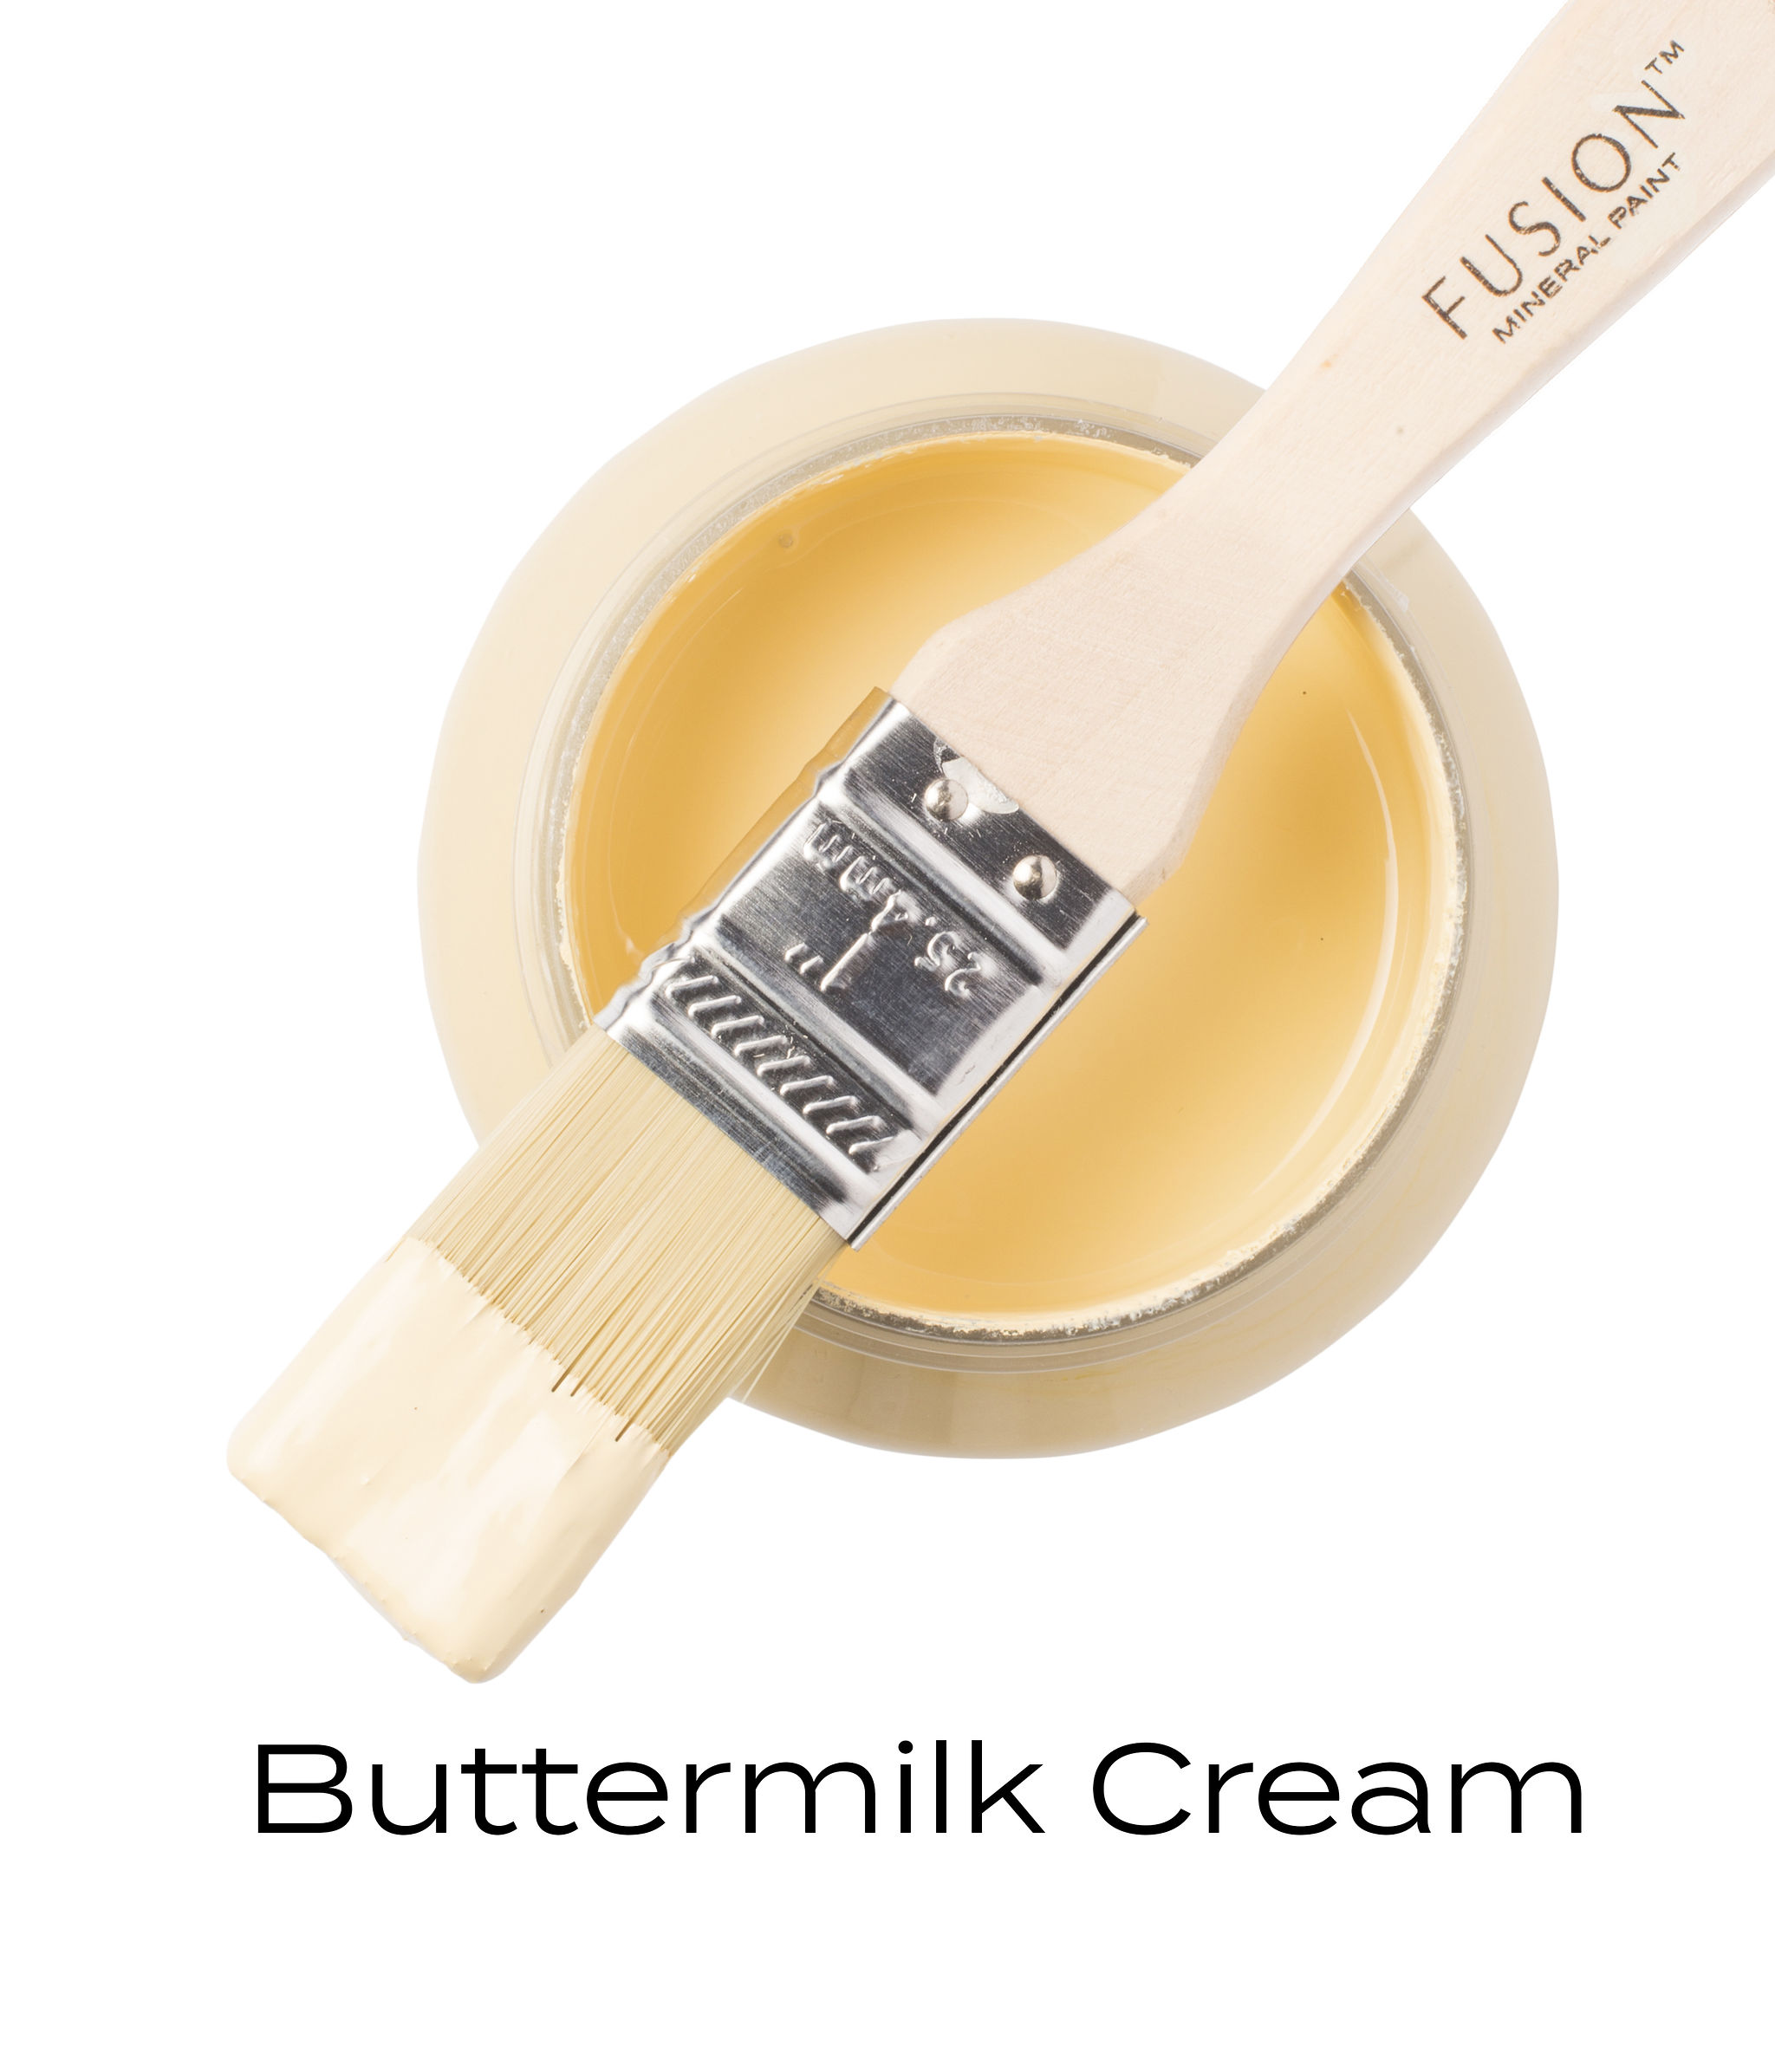 Buttermilk Cream Fusion Minerail Paint Goed Gestyled brielle